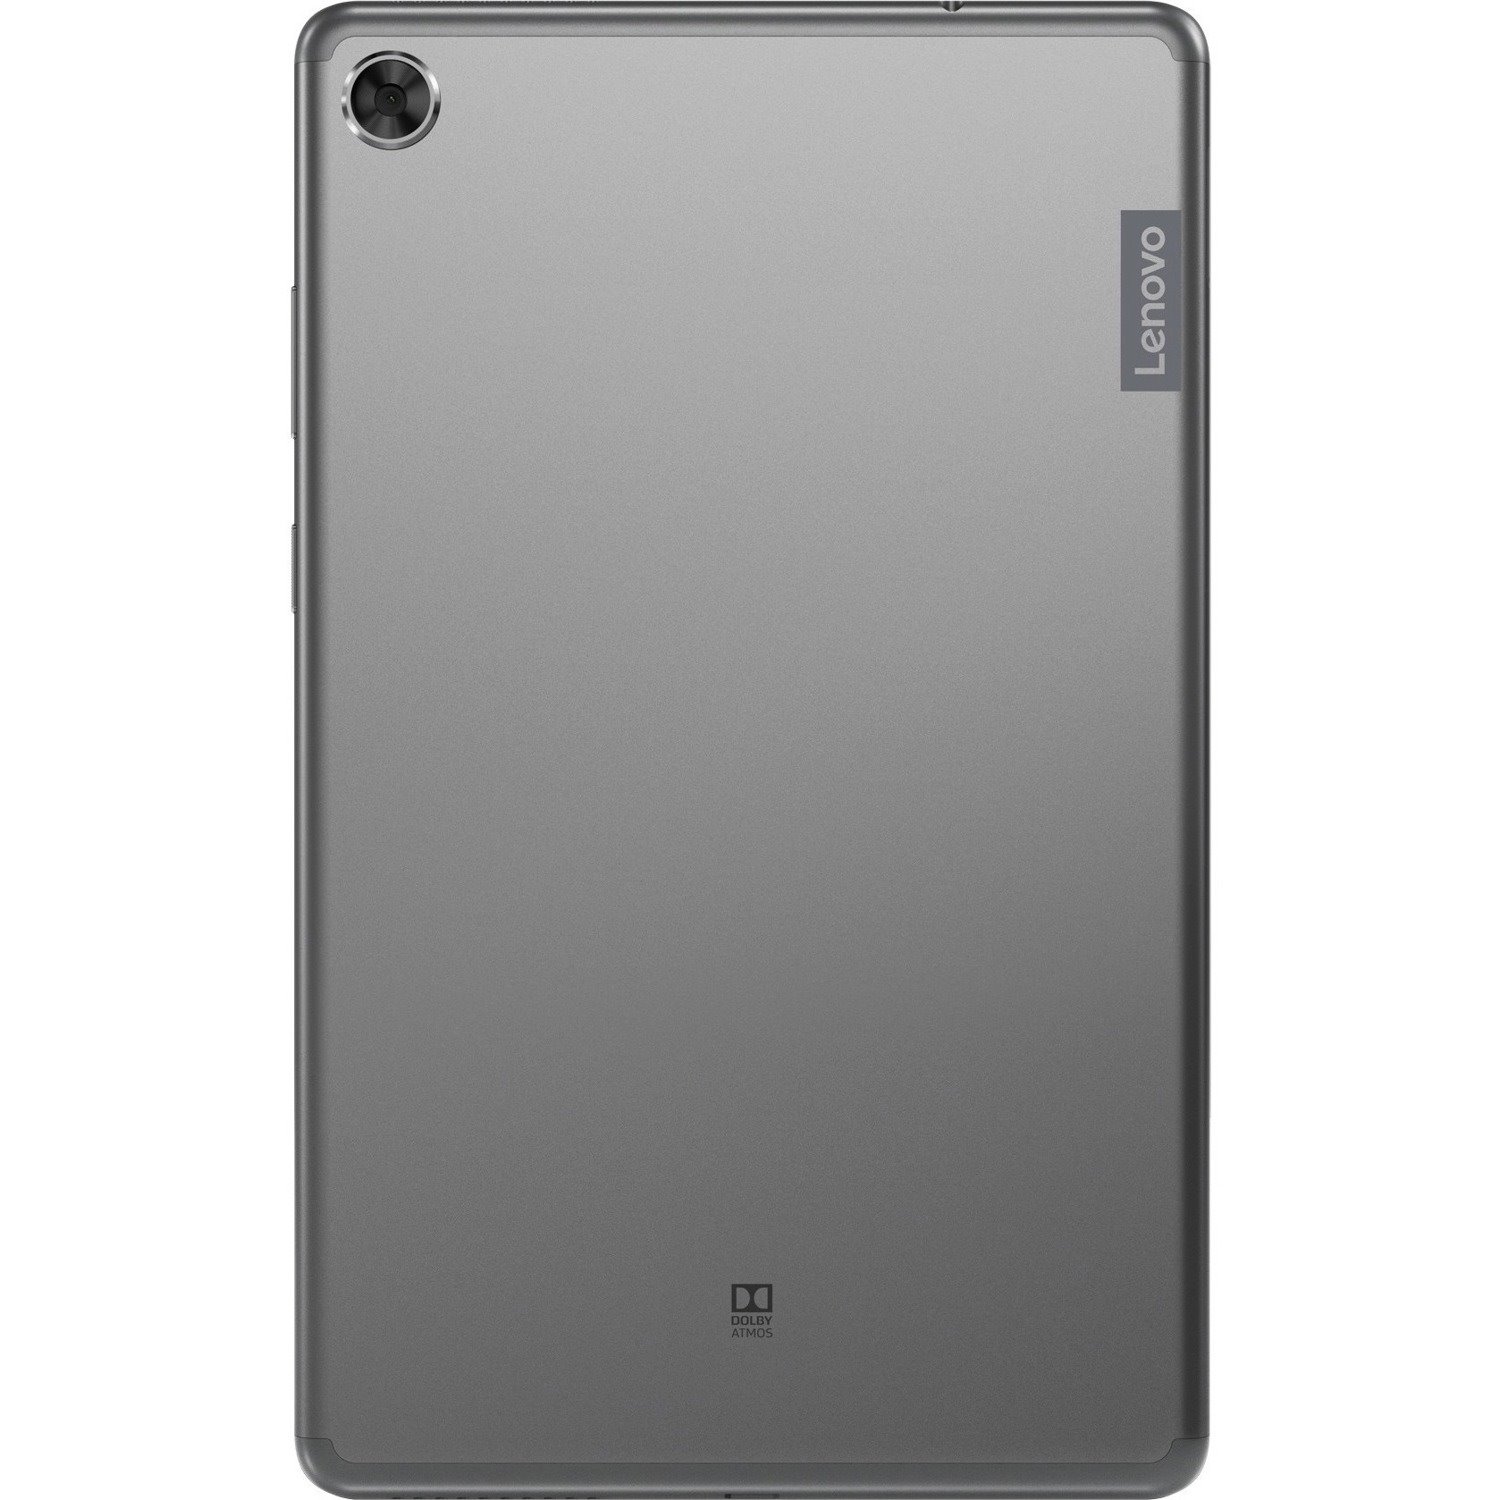 Lenovo Tab M8 HD (2nd Gen) TB-8505F Tablet - 8" HD - MediaTek MT6761 Helio A22 - 2 GB - 16 GB Storage - Android 9.0 Pie - Iron Gray